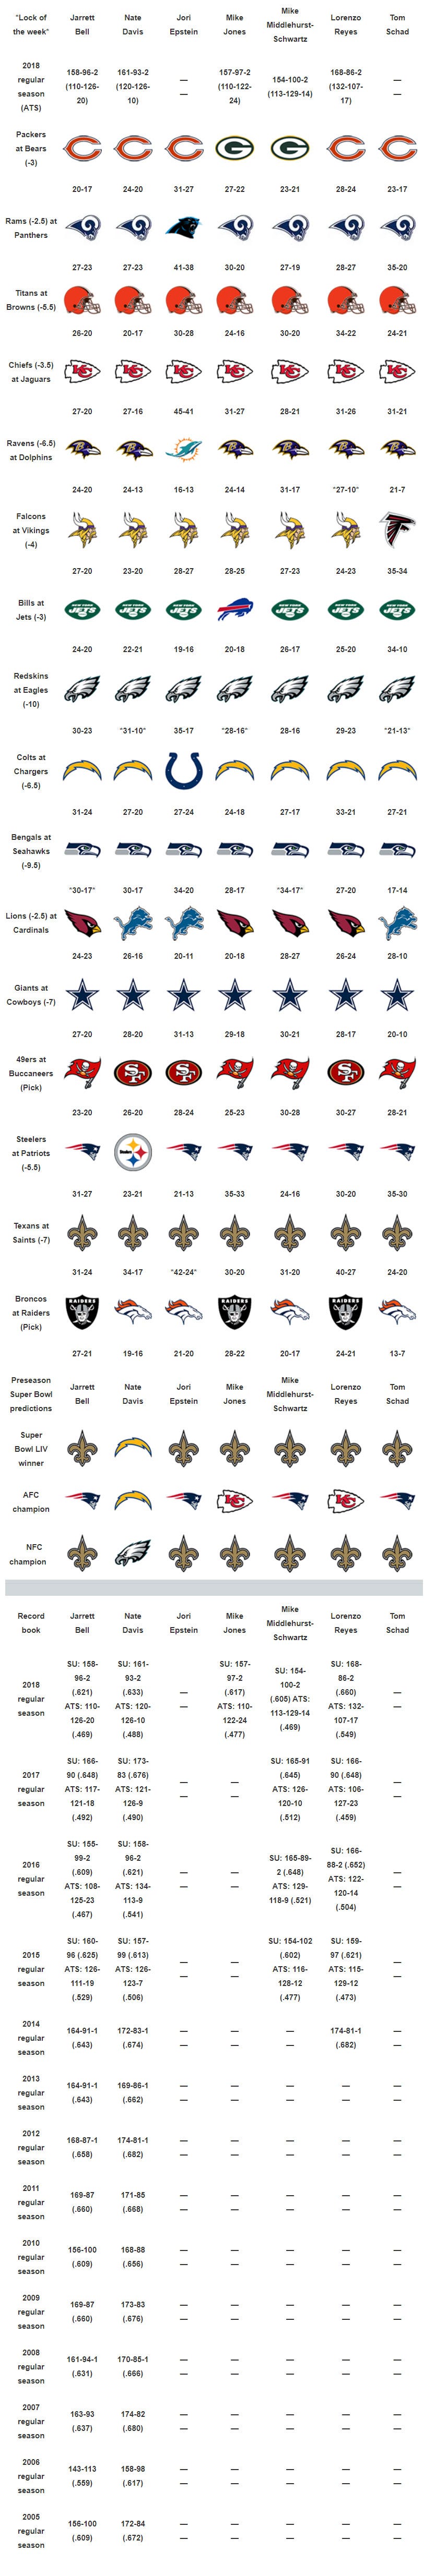 USA TODAY Week 1 NFL picks: Do Steelers upset Patriots in opener?